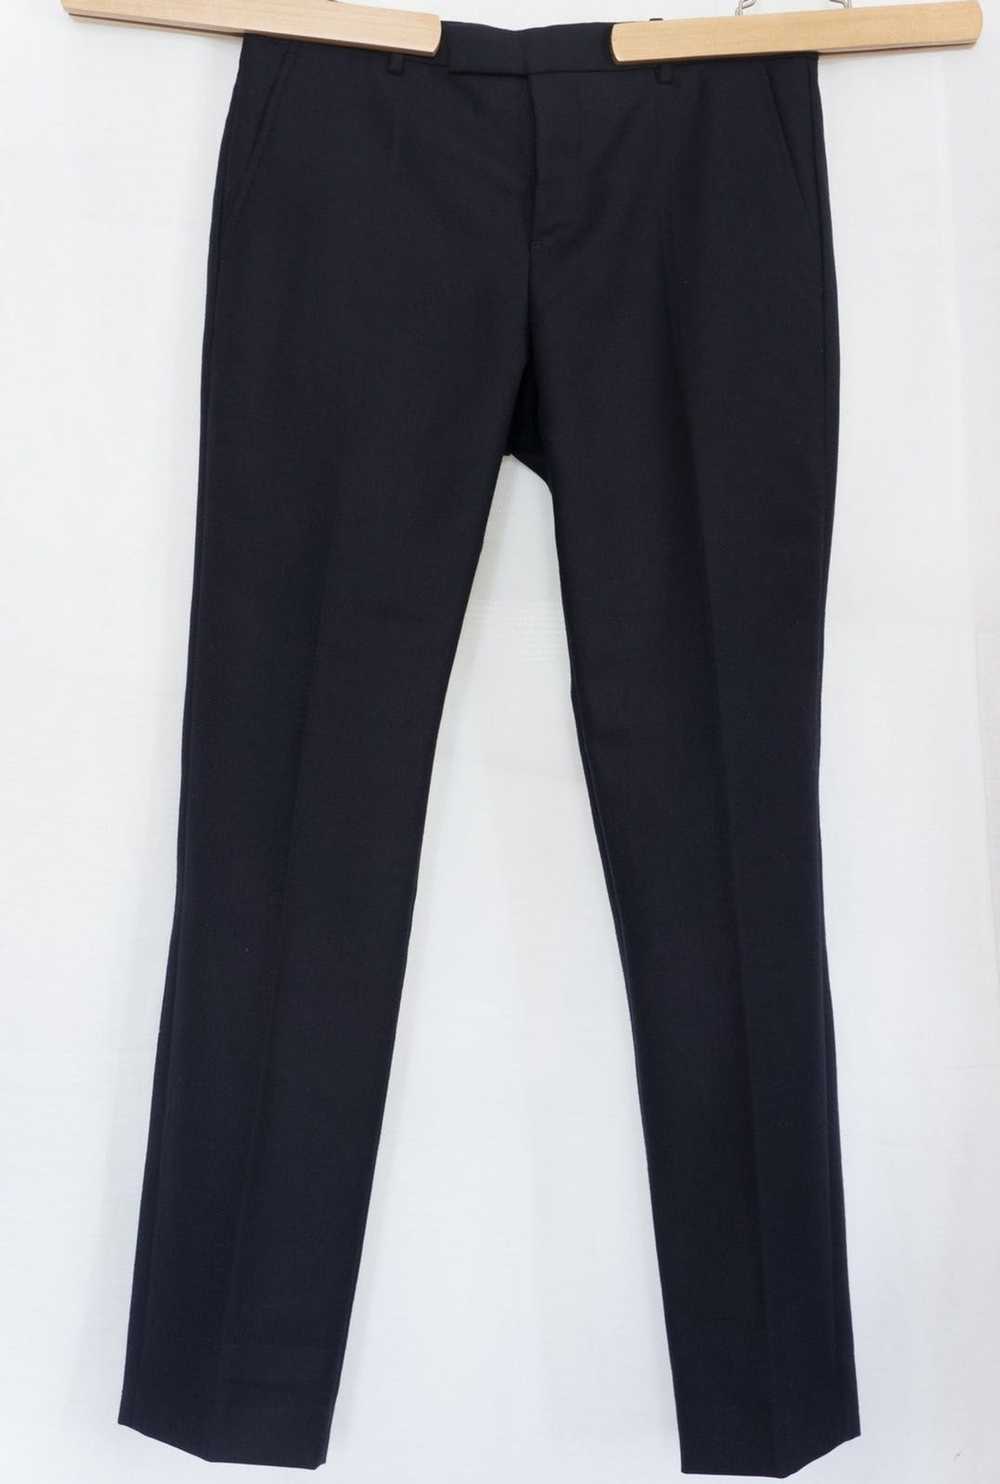 Marni Marni Wool Navy Trousers - image 1